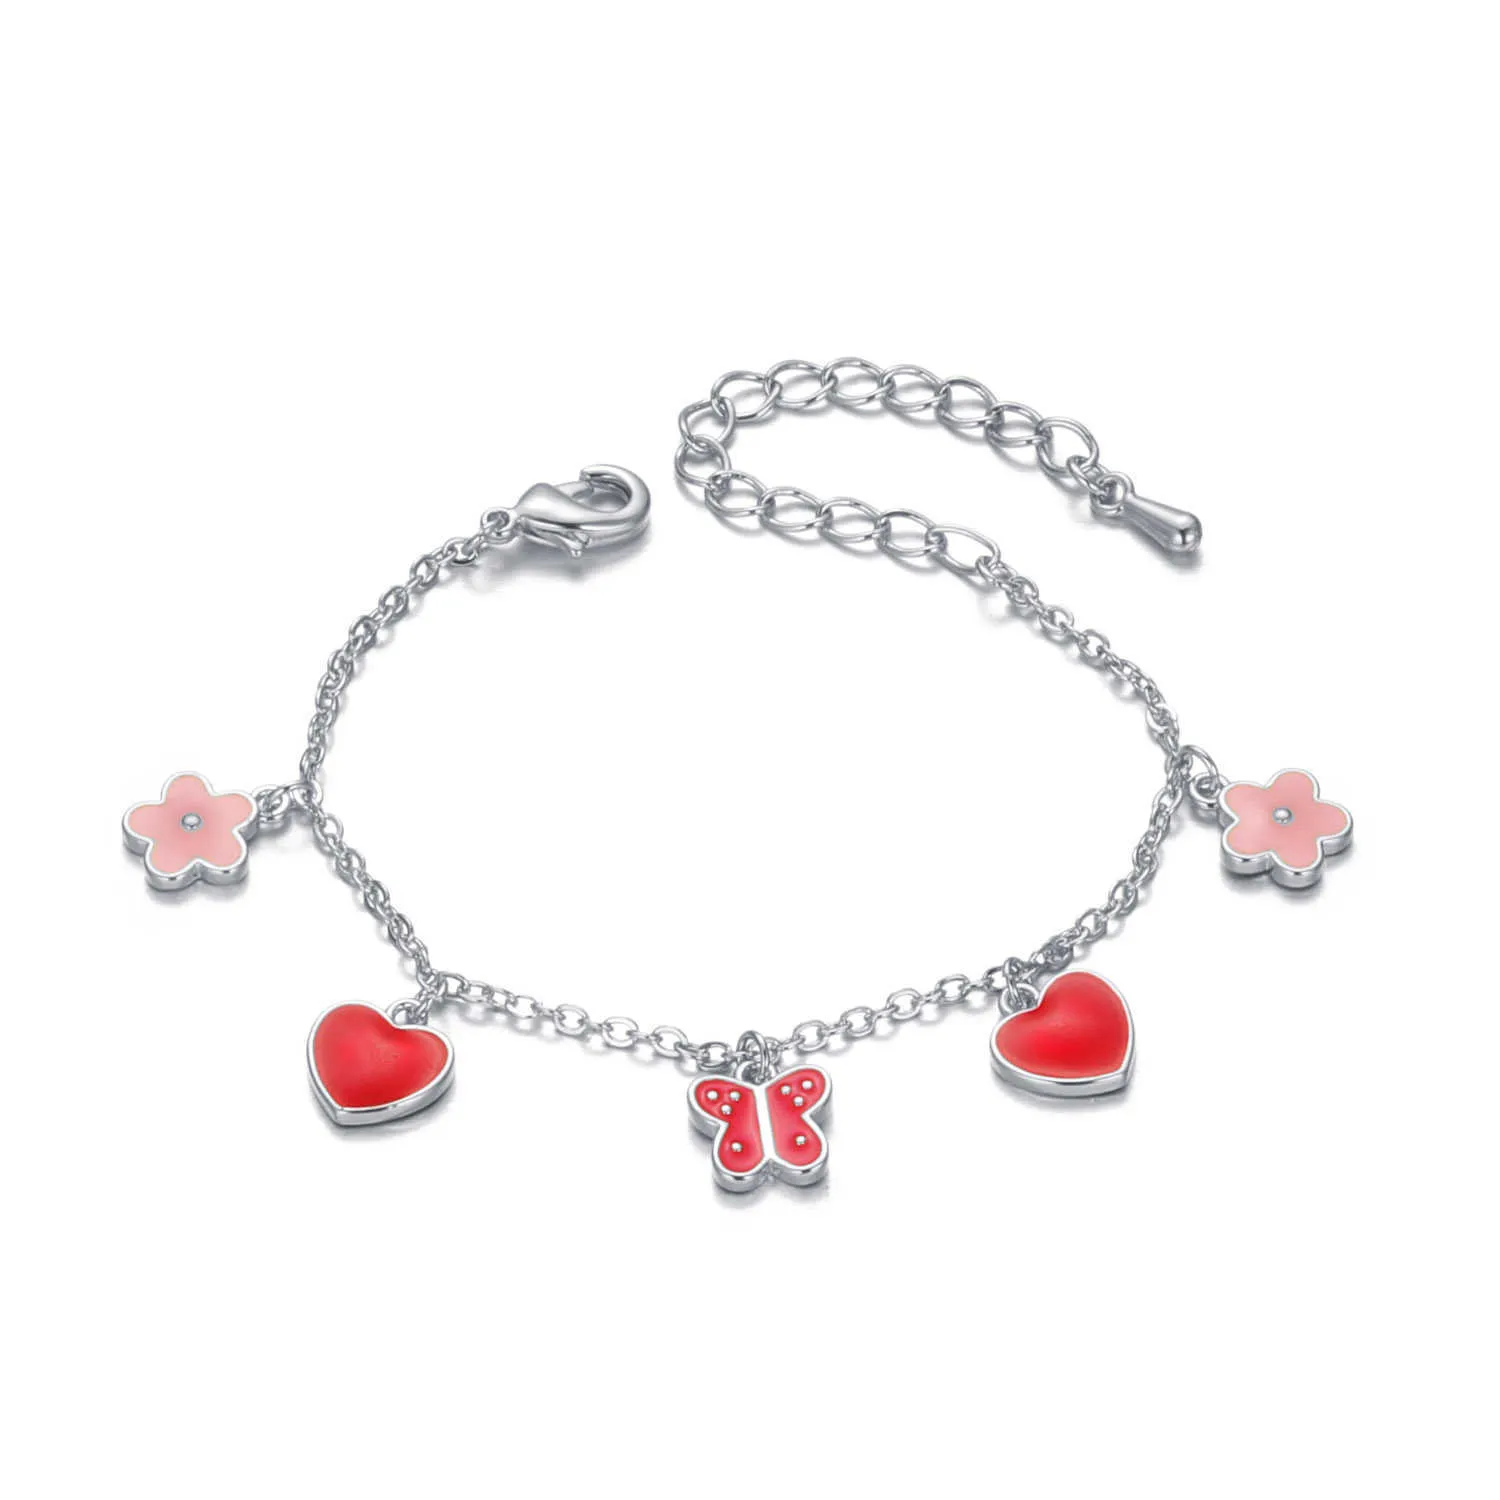 12pc My Girl Bracelets Pink Crystal Heart Love Beads Chain Bangles Charm  Jewelry Family Girls Kids Children Christmas Gifts Hot - Bracelets -  AliExpress